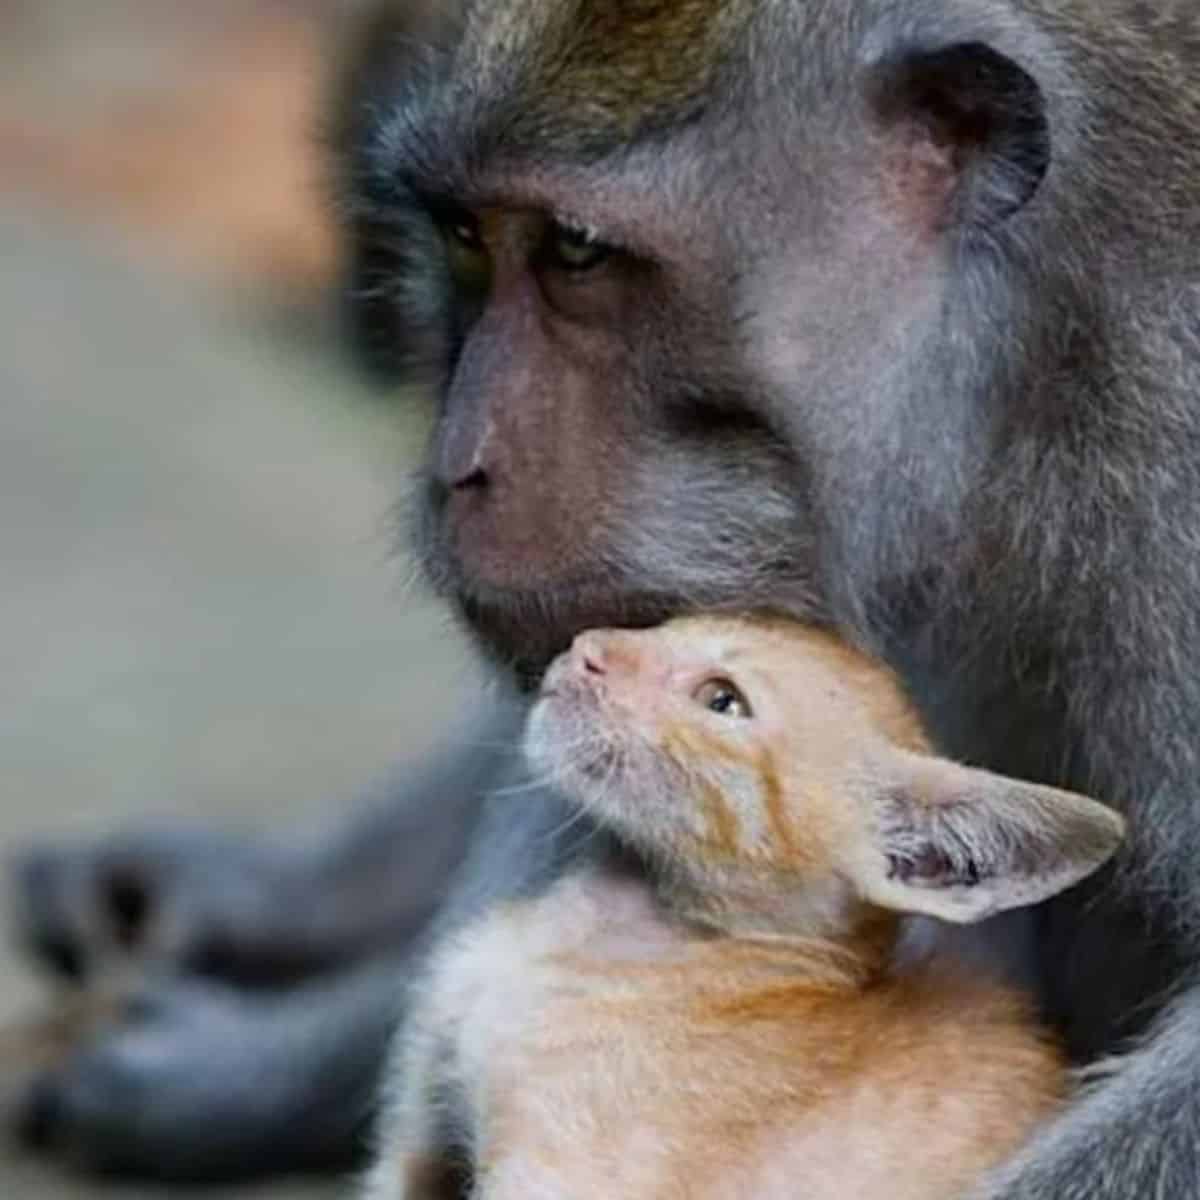 the kitten enjoys the monkey's hug